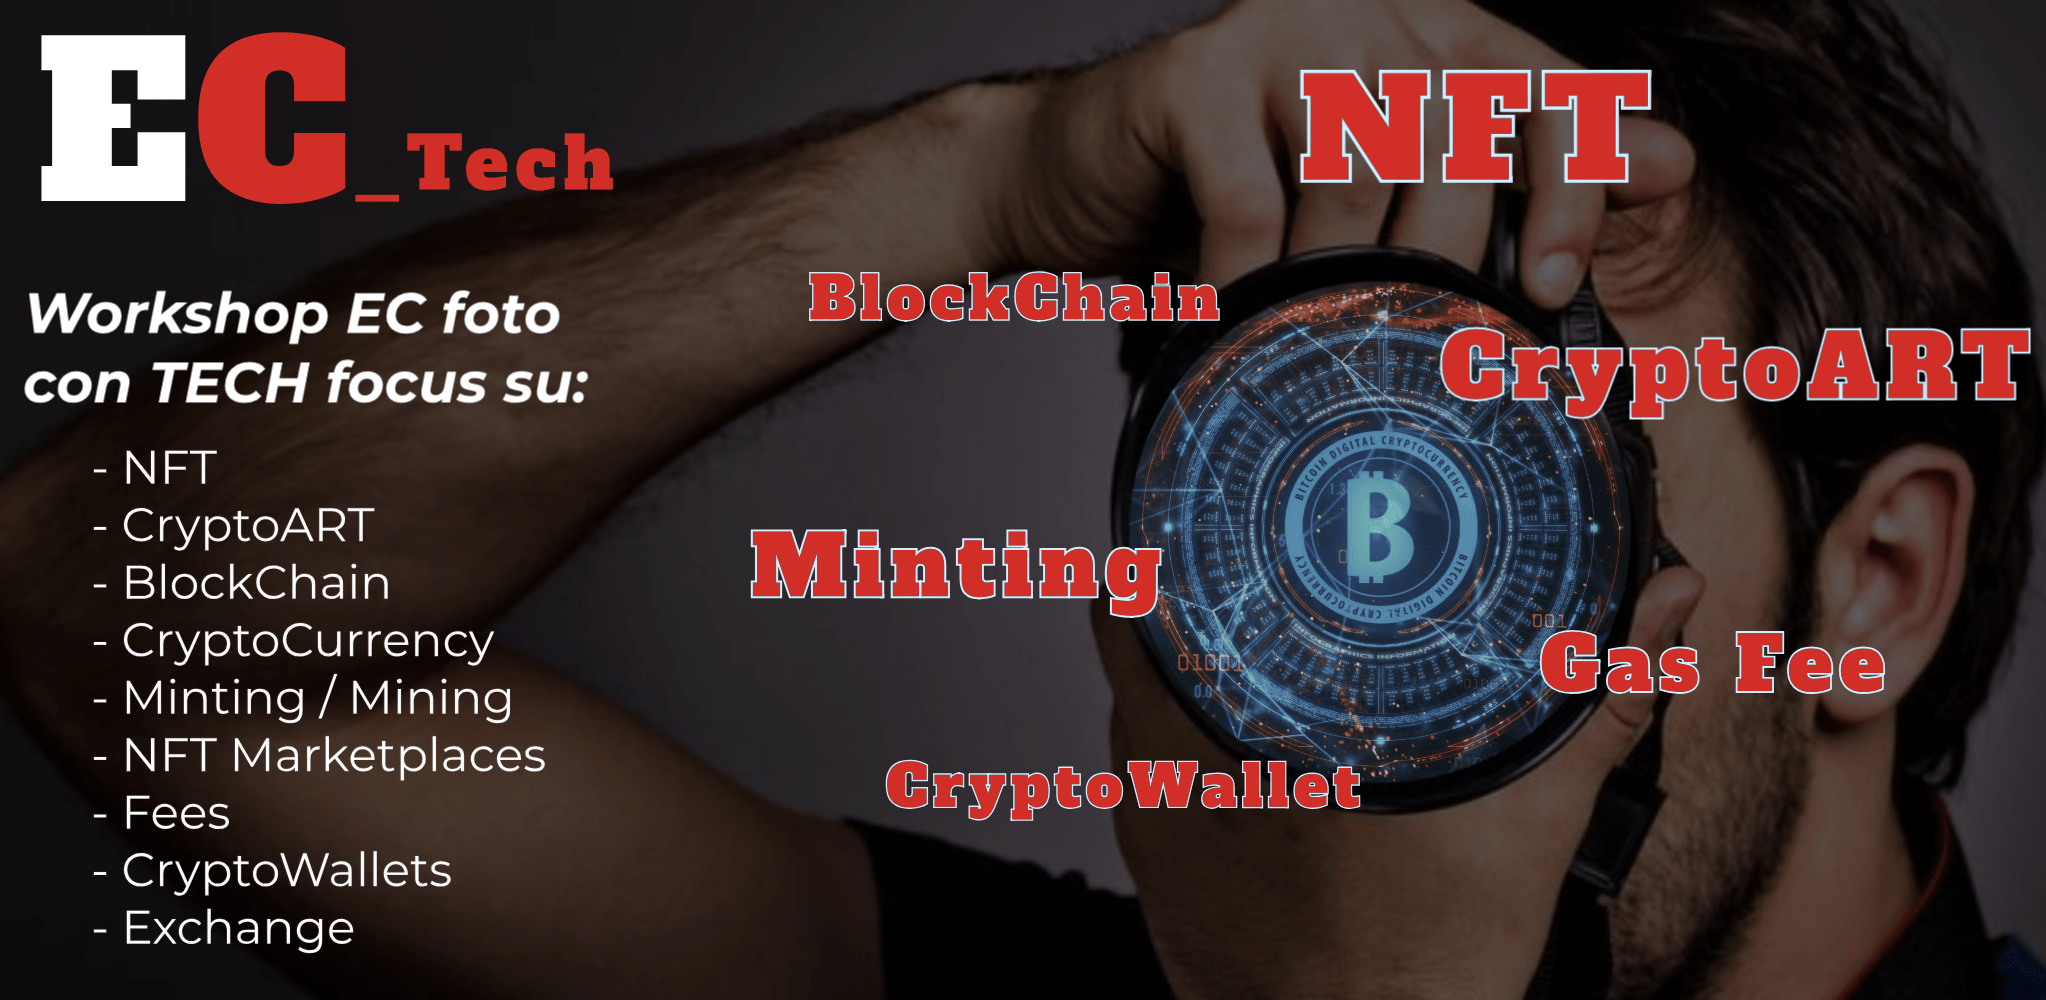 EC - NFT Workshop - Blockchain - CryptoArt